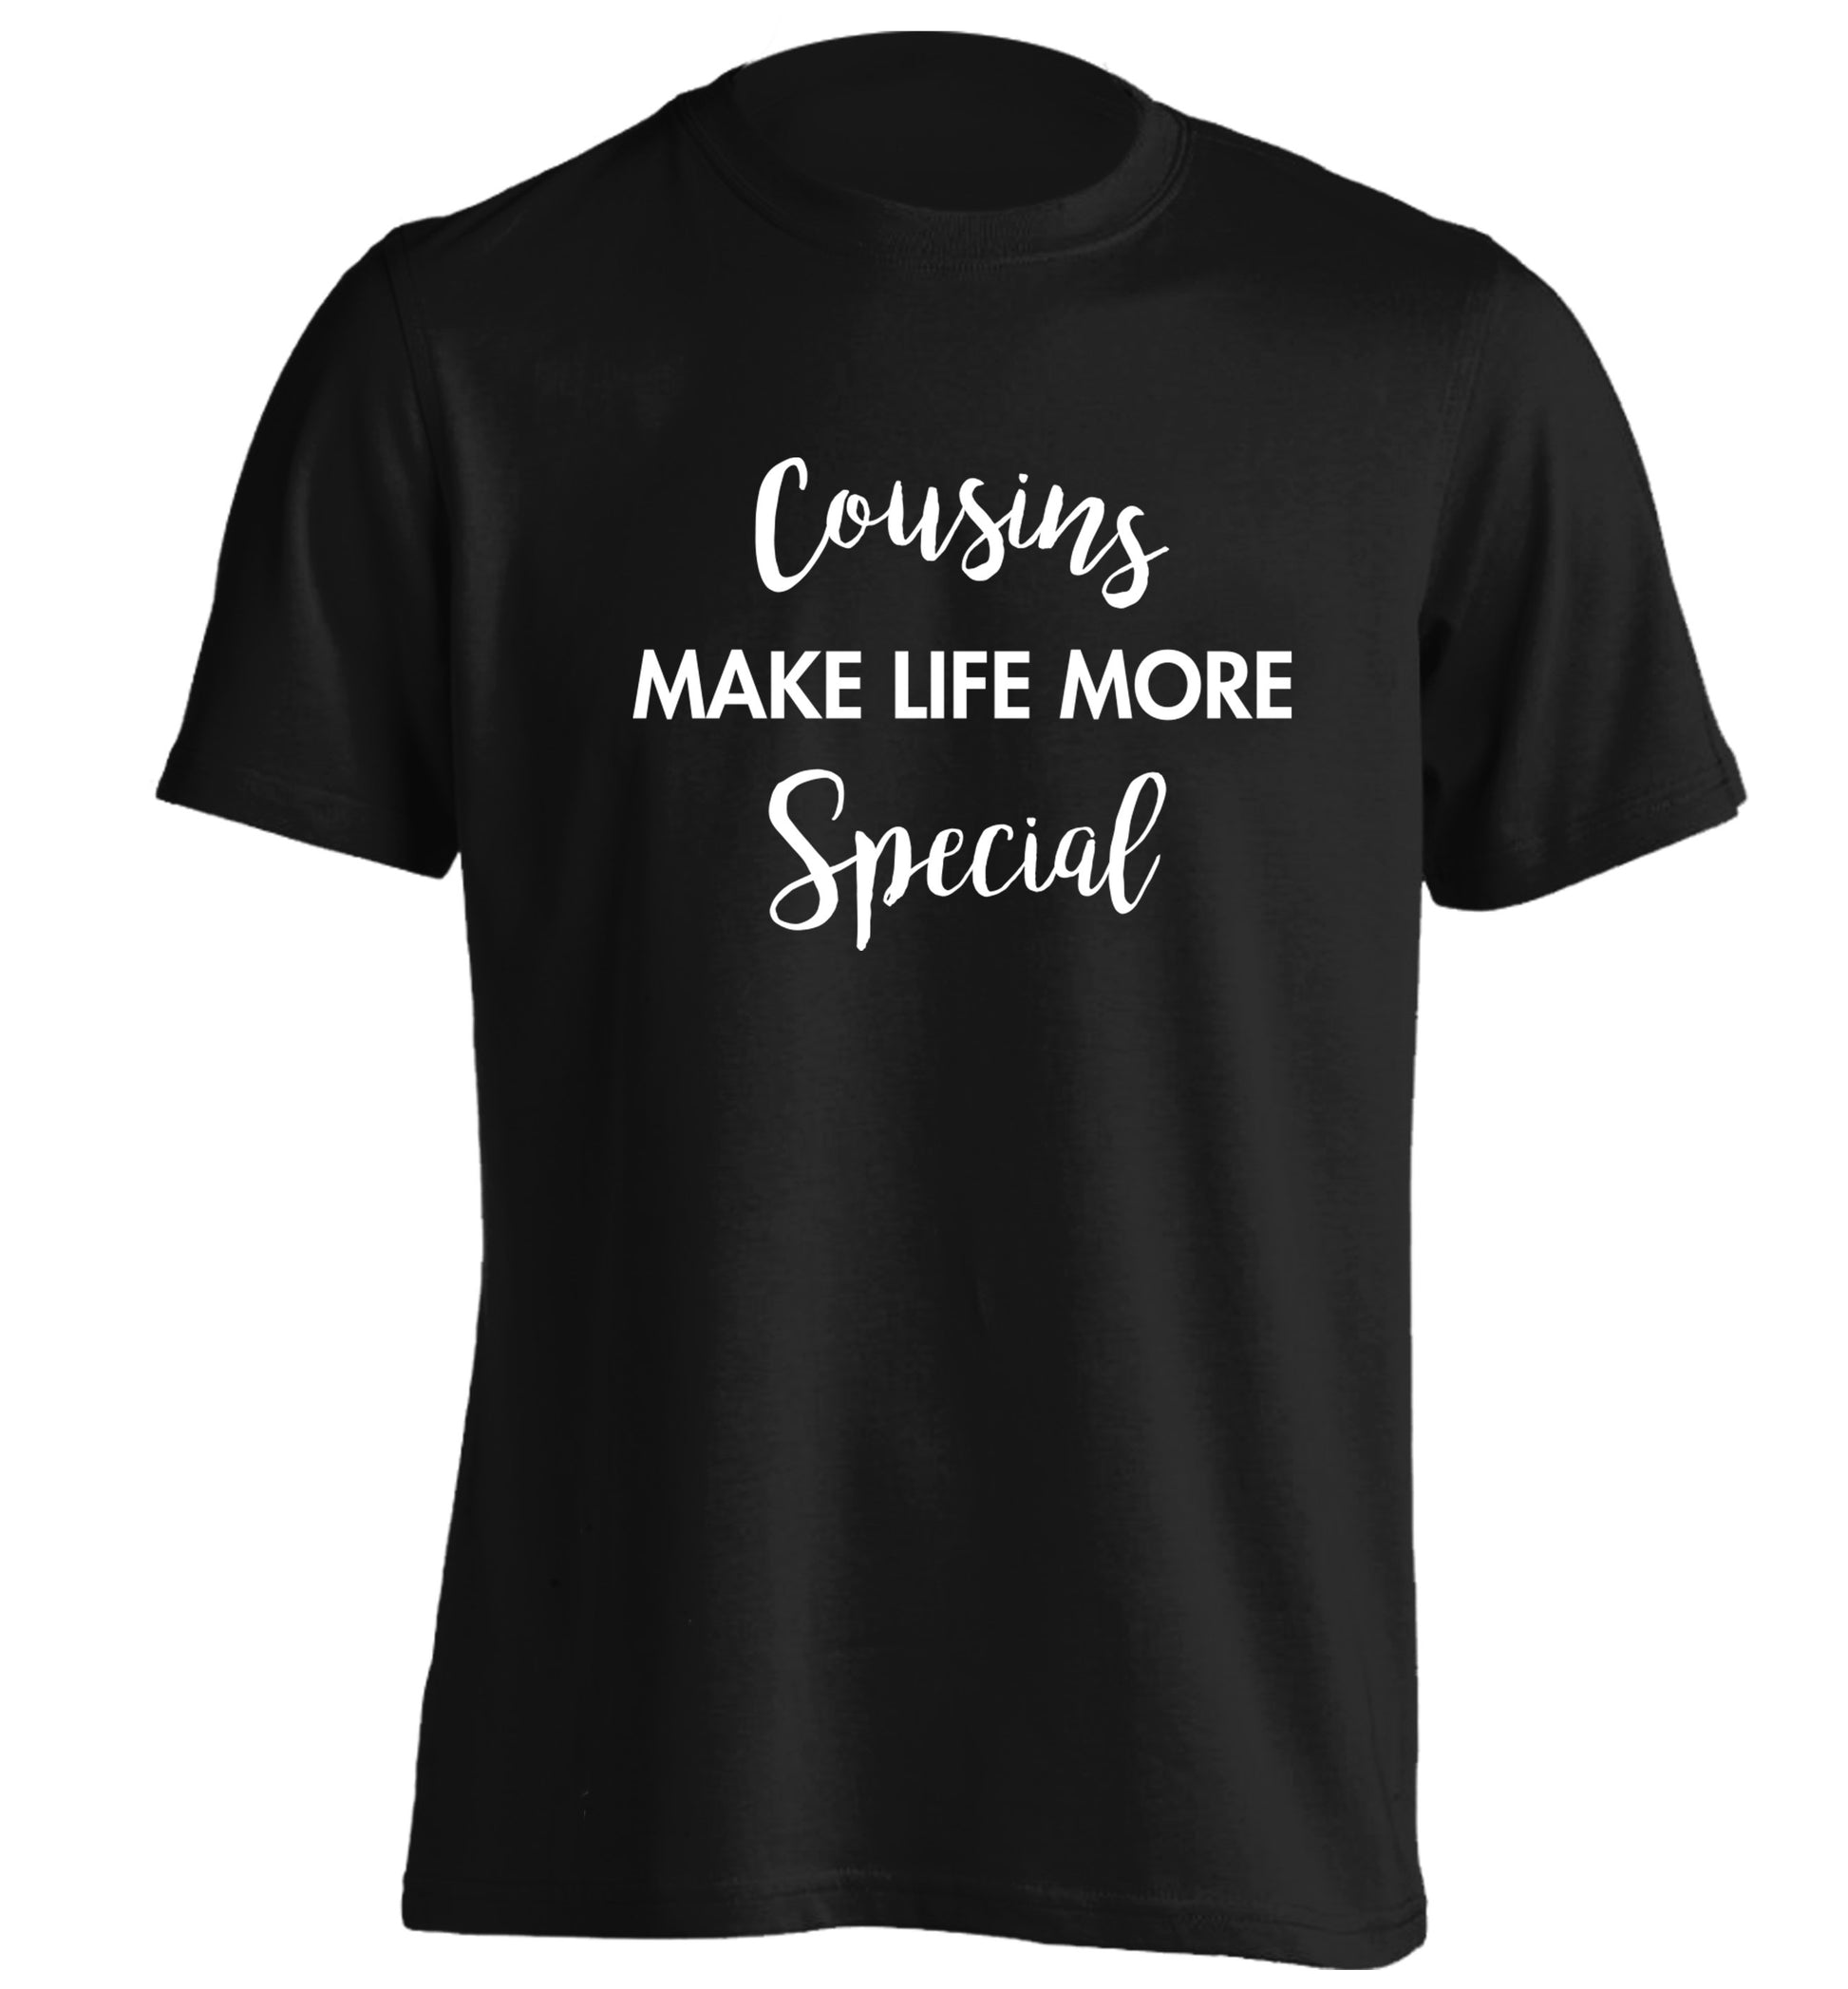 Cousins make life more special adults unisex black Tshirt 2XL